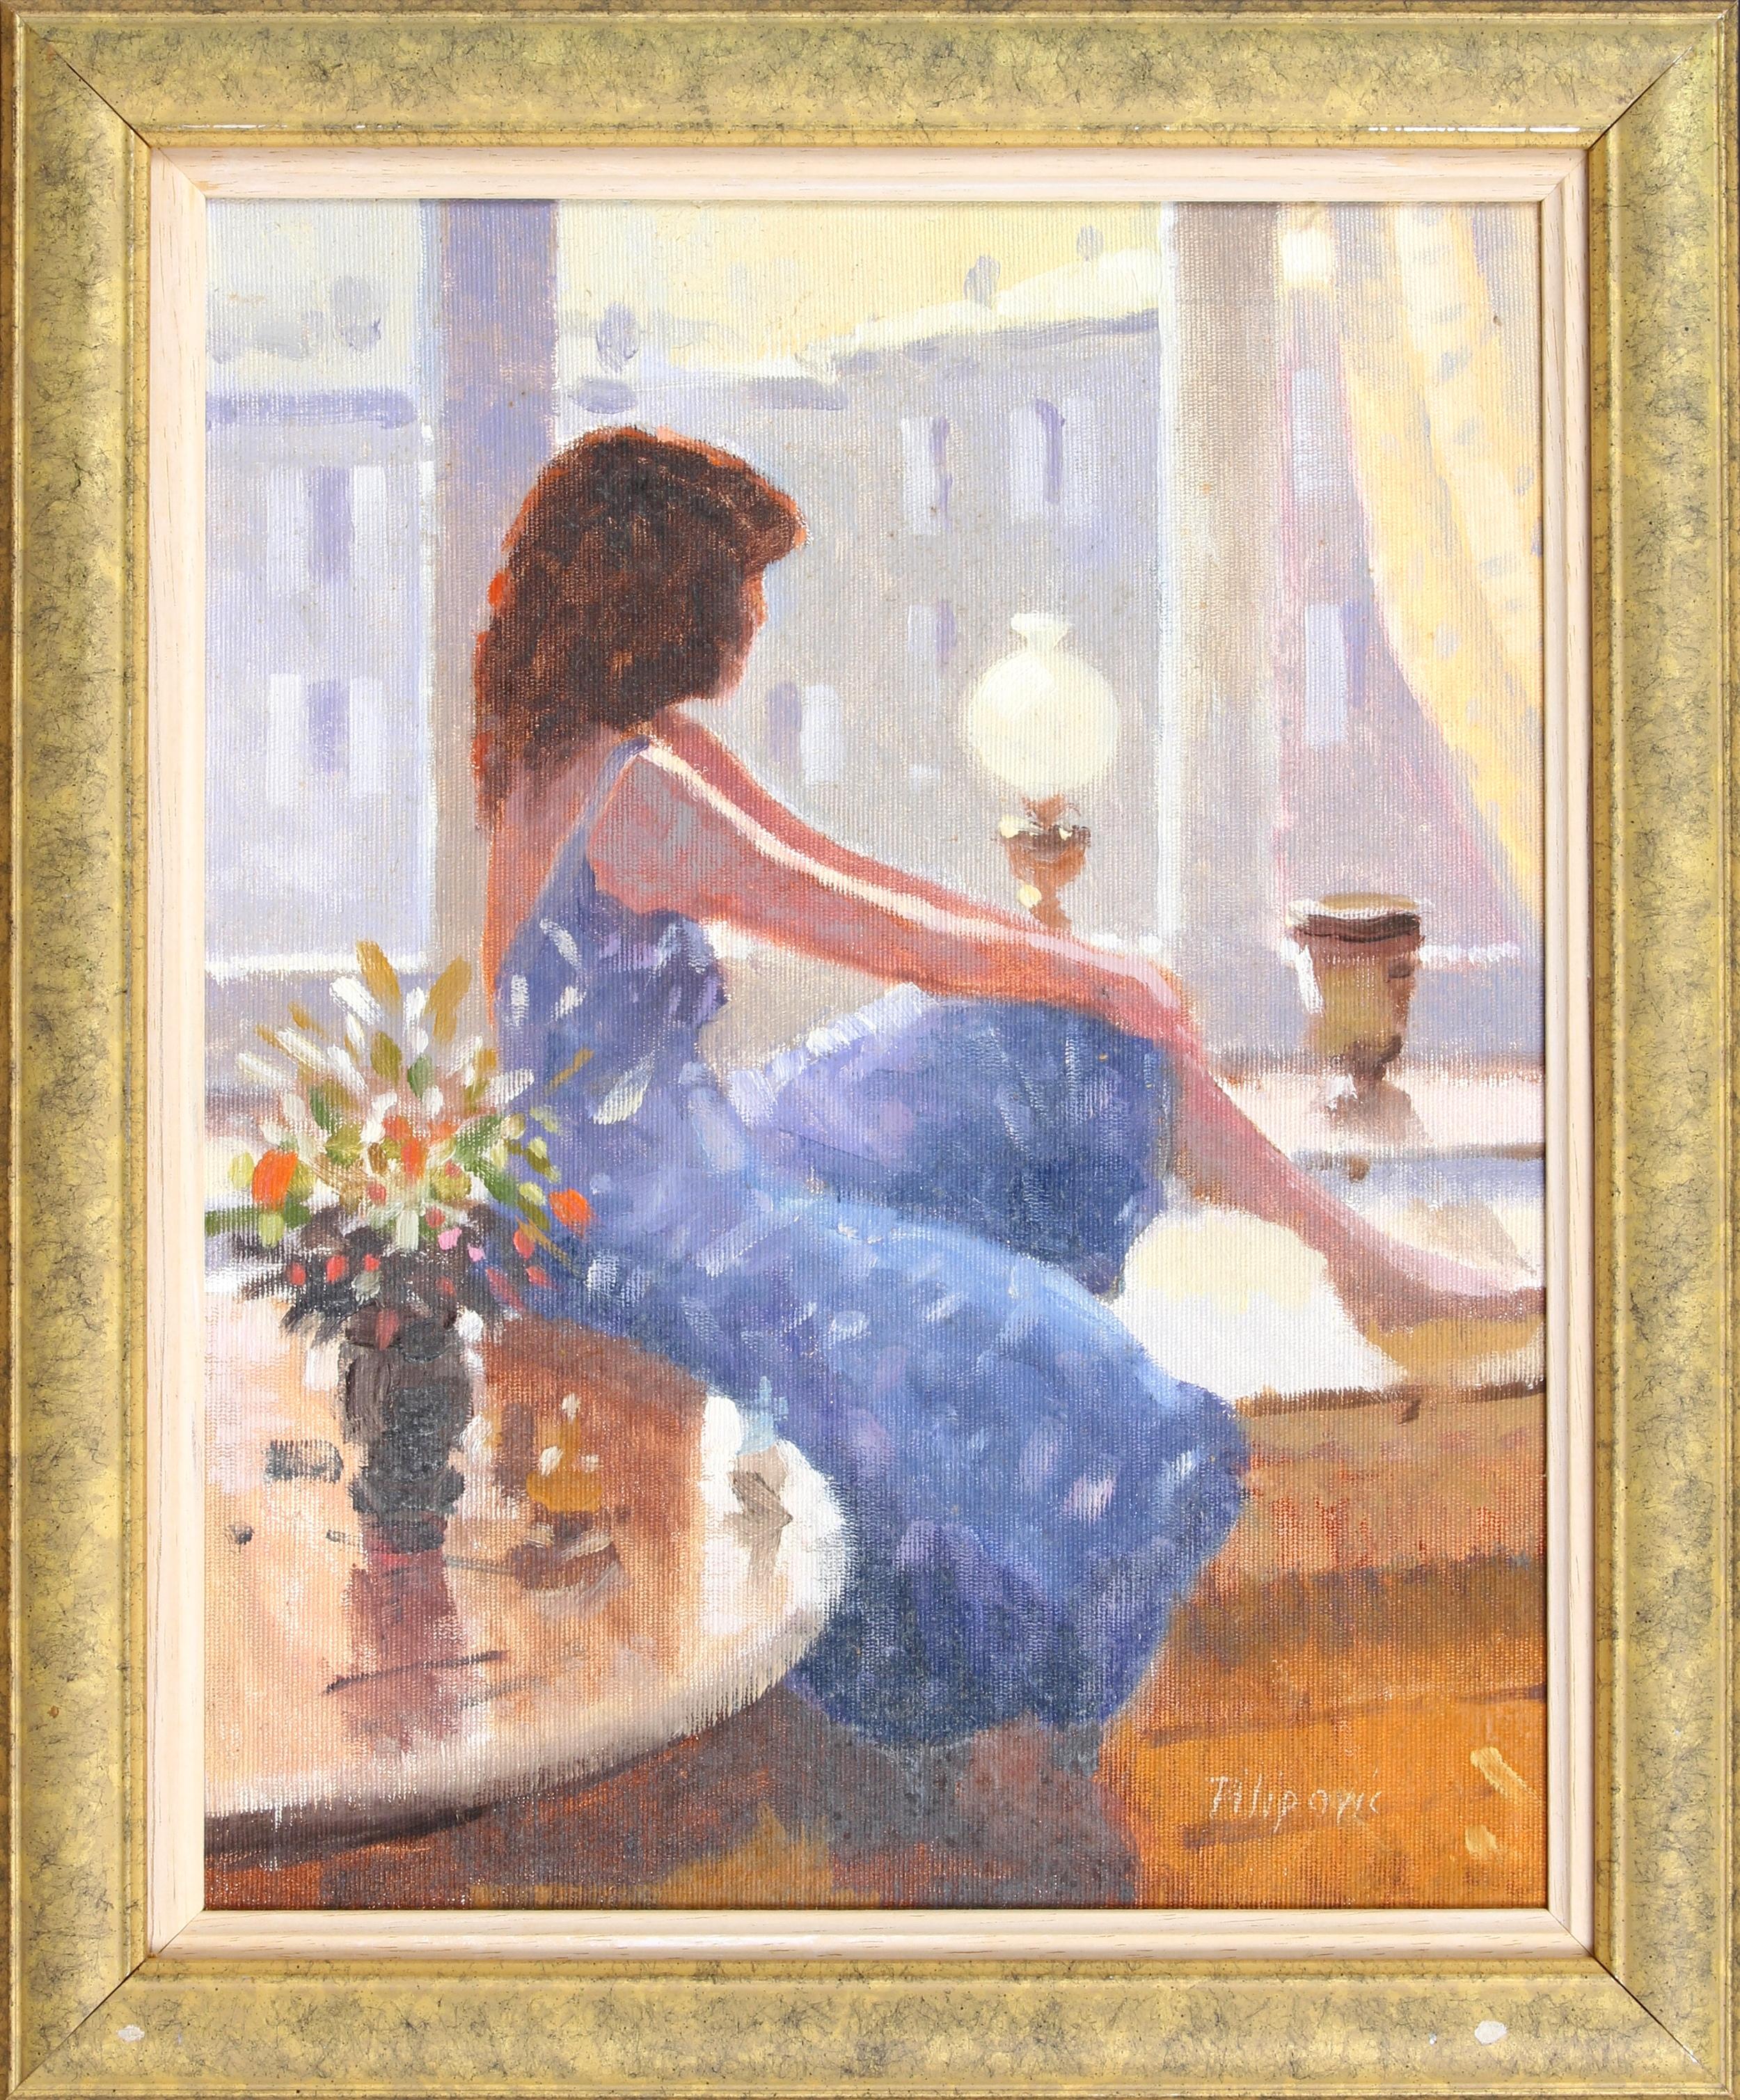 Zlatan Pilipovic Portrait Painting - Lady in the Artist's Studio - Beautiful Dappled Light Portrait Oil Painting